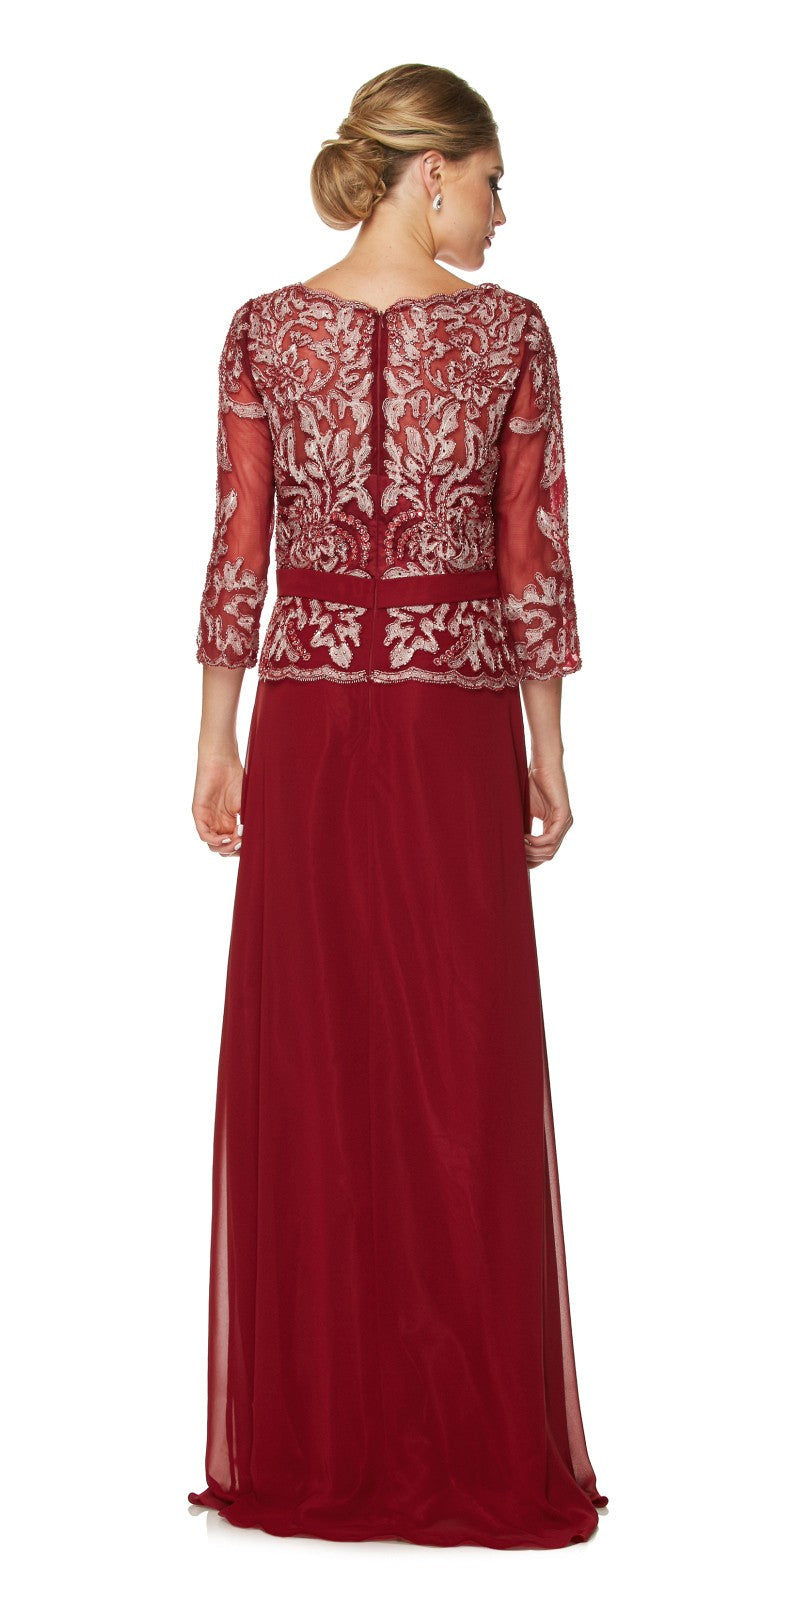 Juliet 634 Quarter Sleeve Formal Dress with Lace Applique Bodice Burgundy